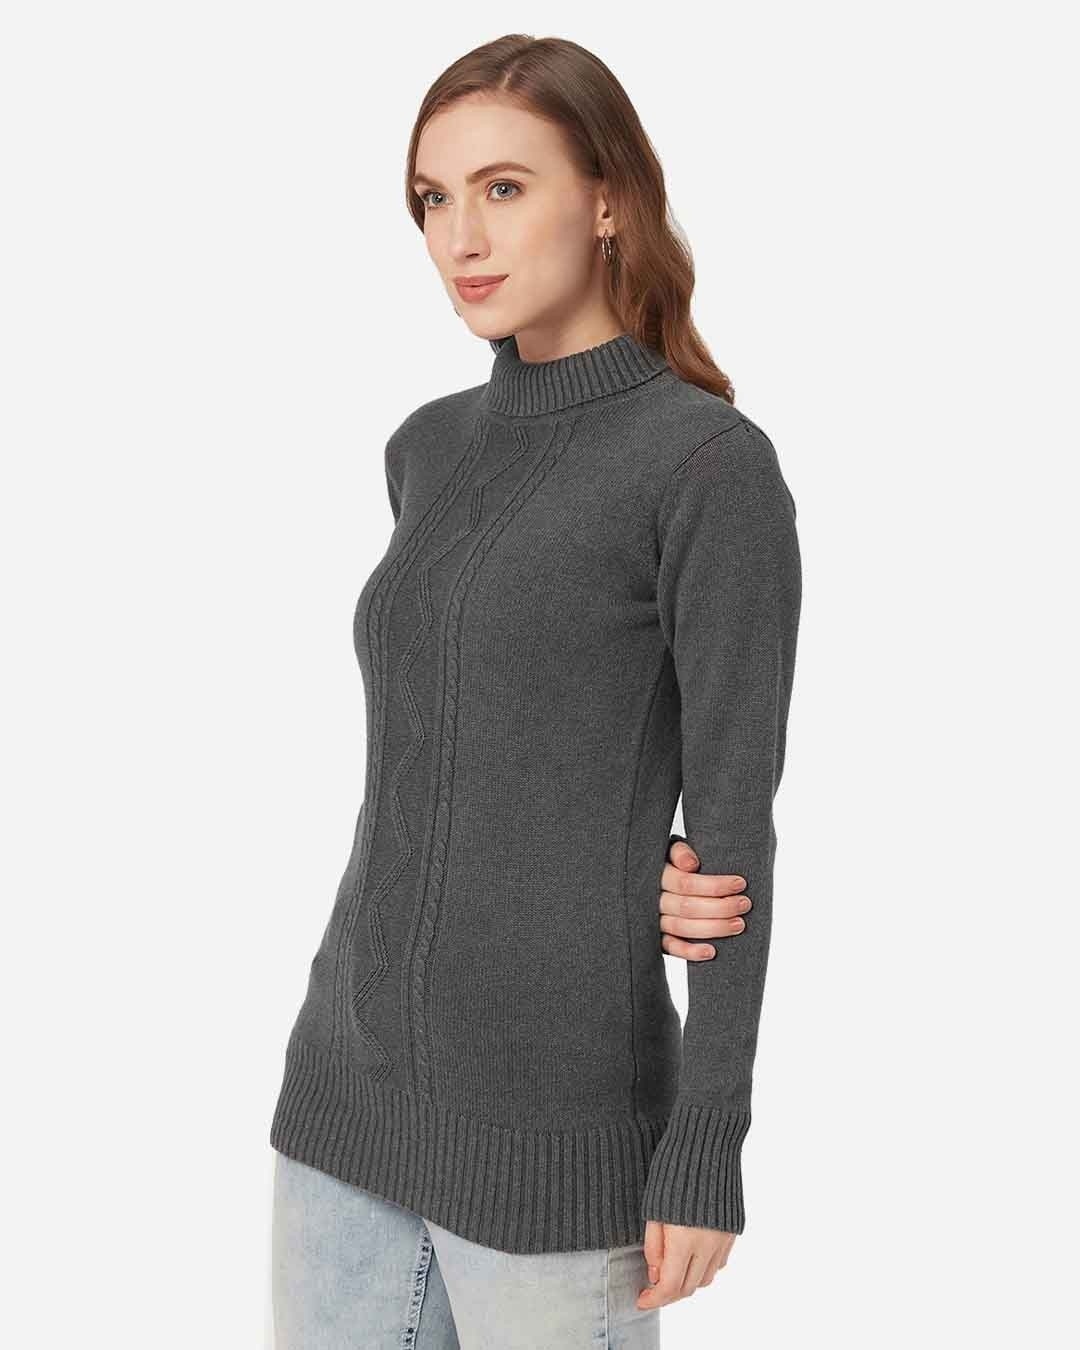 Shop Women's Charcoal Grey Self Design Pullover-Back